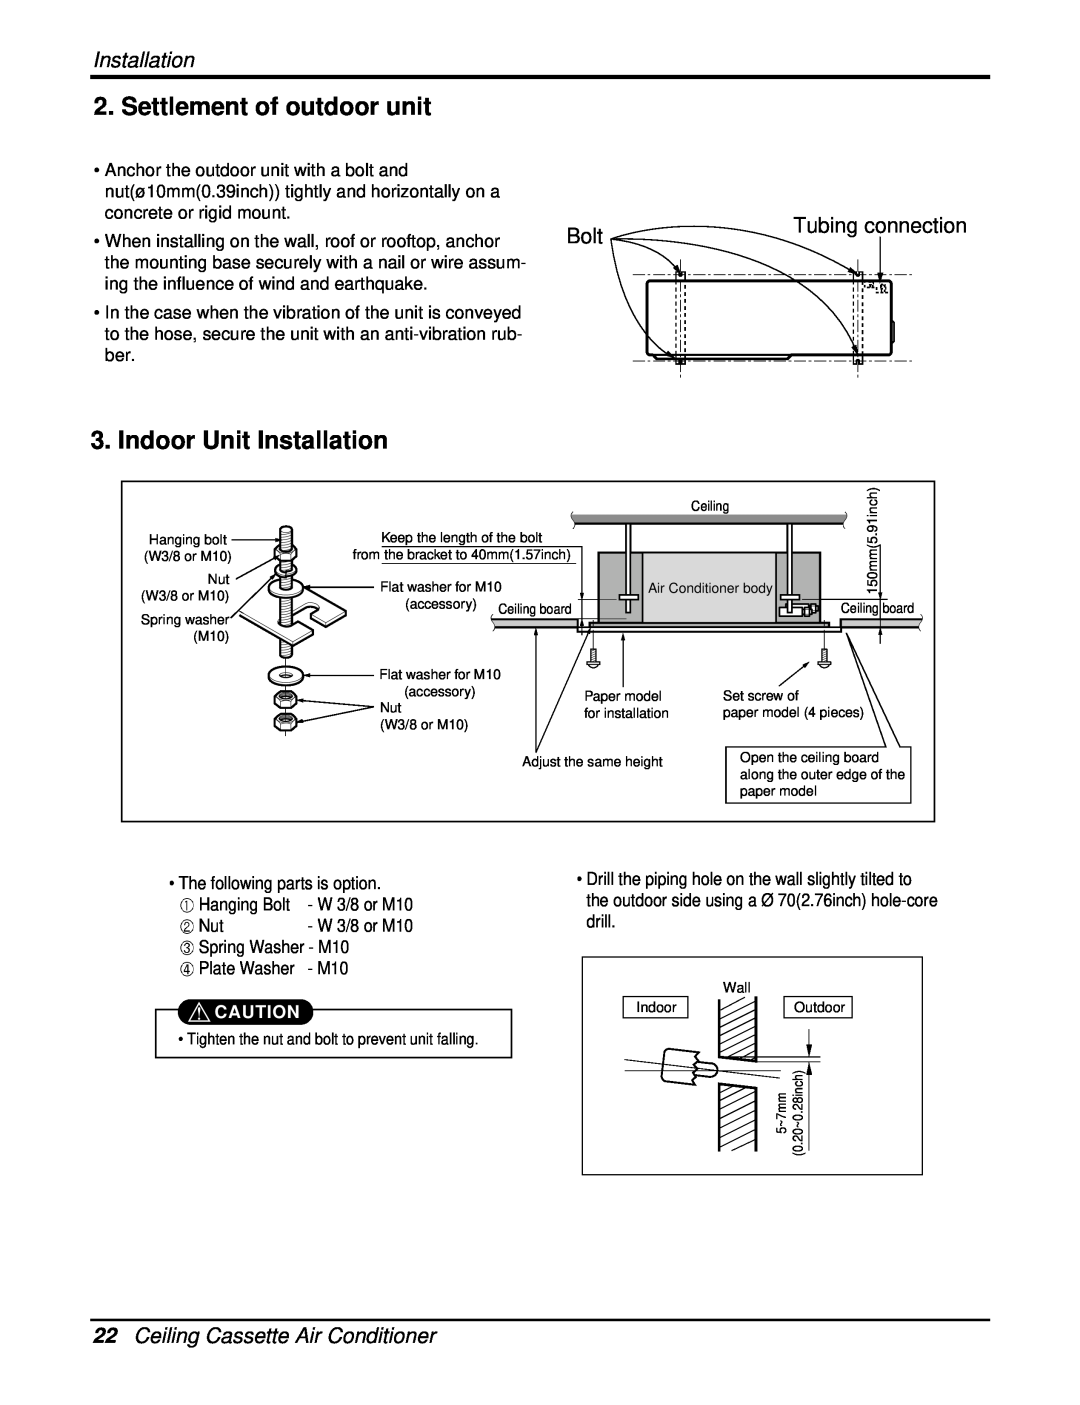 Heat Controller DMC24CA-1 Settlement of outdoor unit, Indoor Unit Installation, 22Ceiling Cassette Air Conditioner, Bolt 